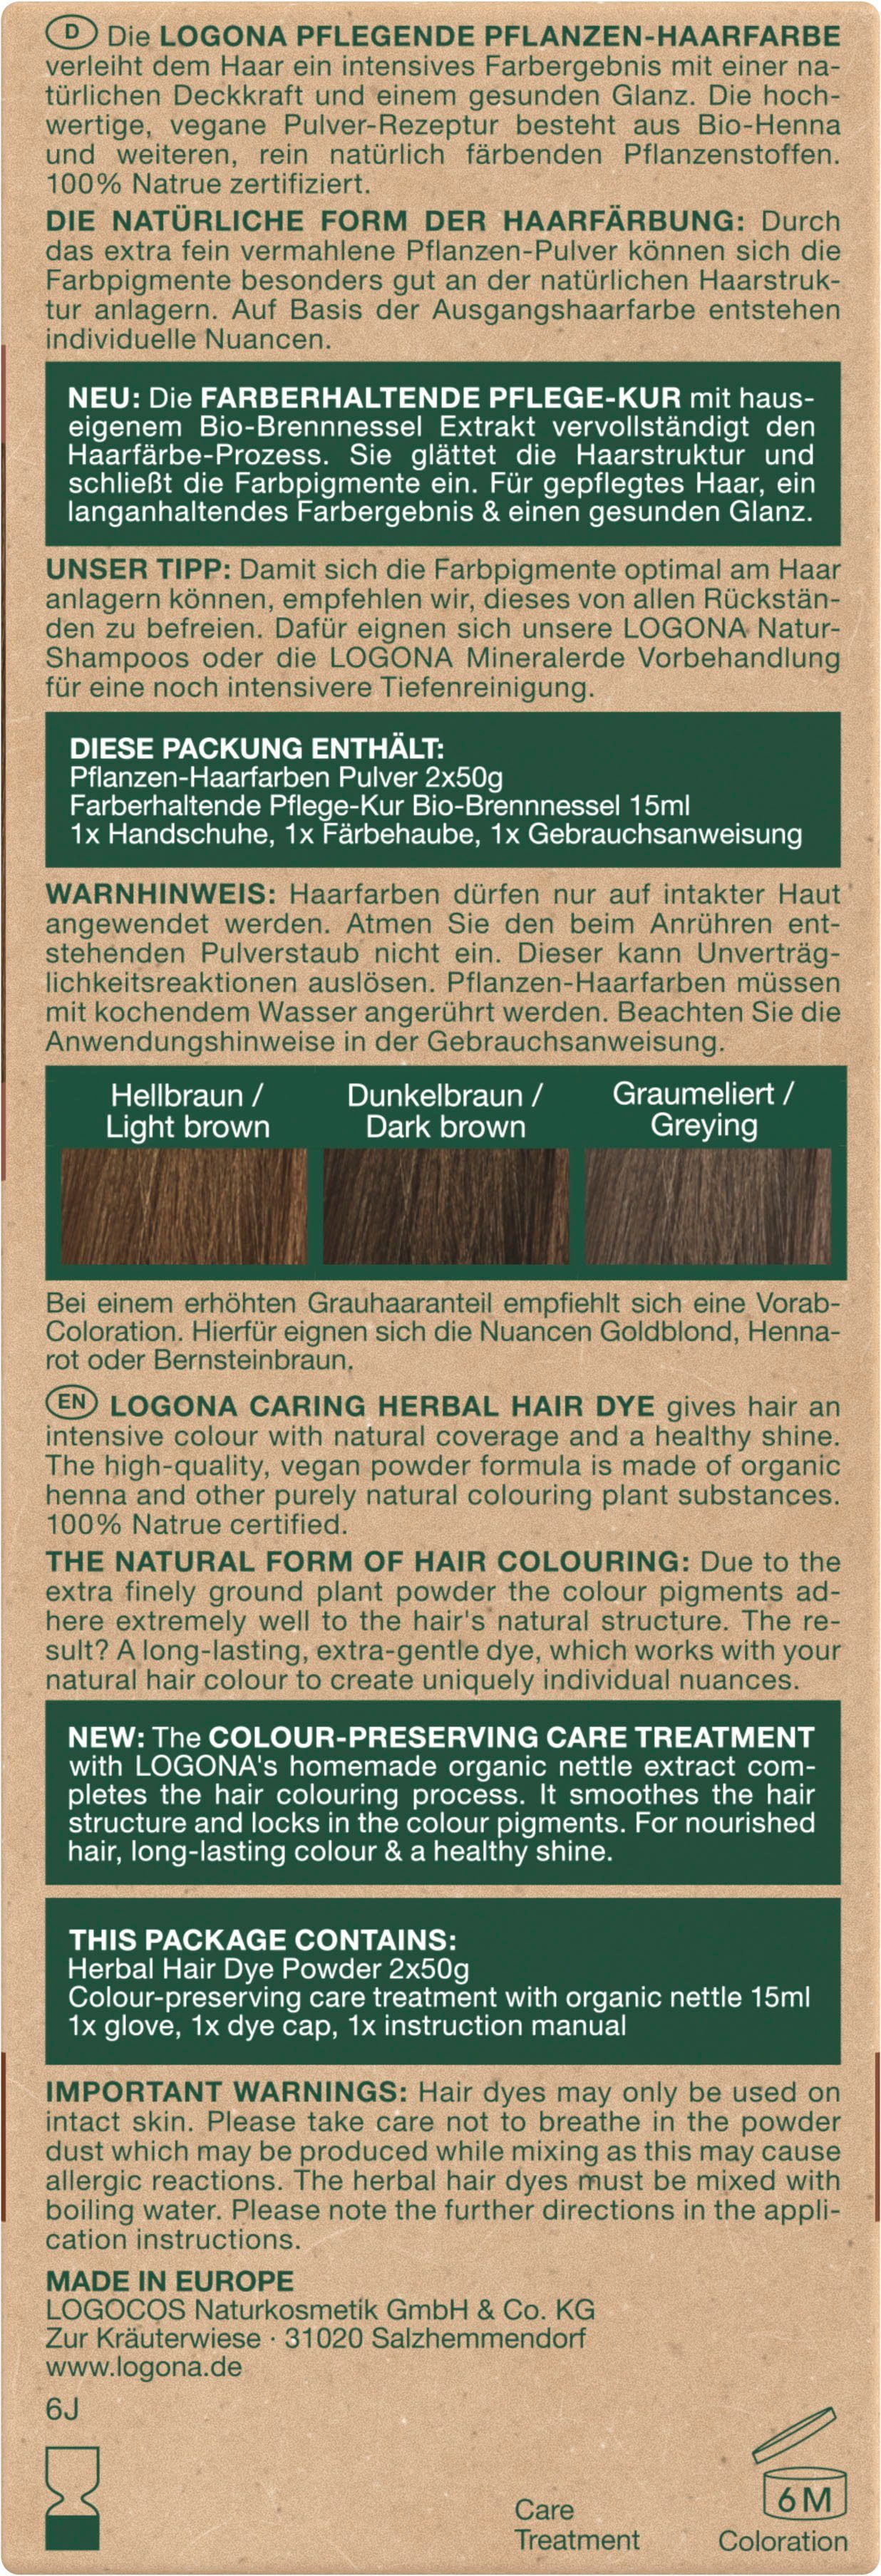 Pflanzen-Haarfarbe Aschbraun Haarfarbe LOGONA Pulver 08